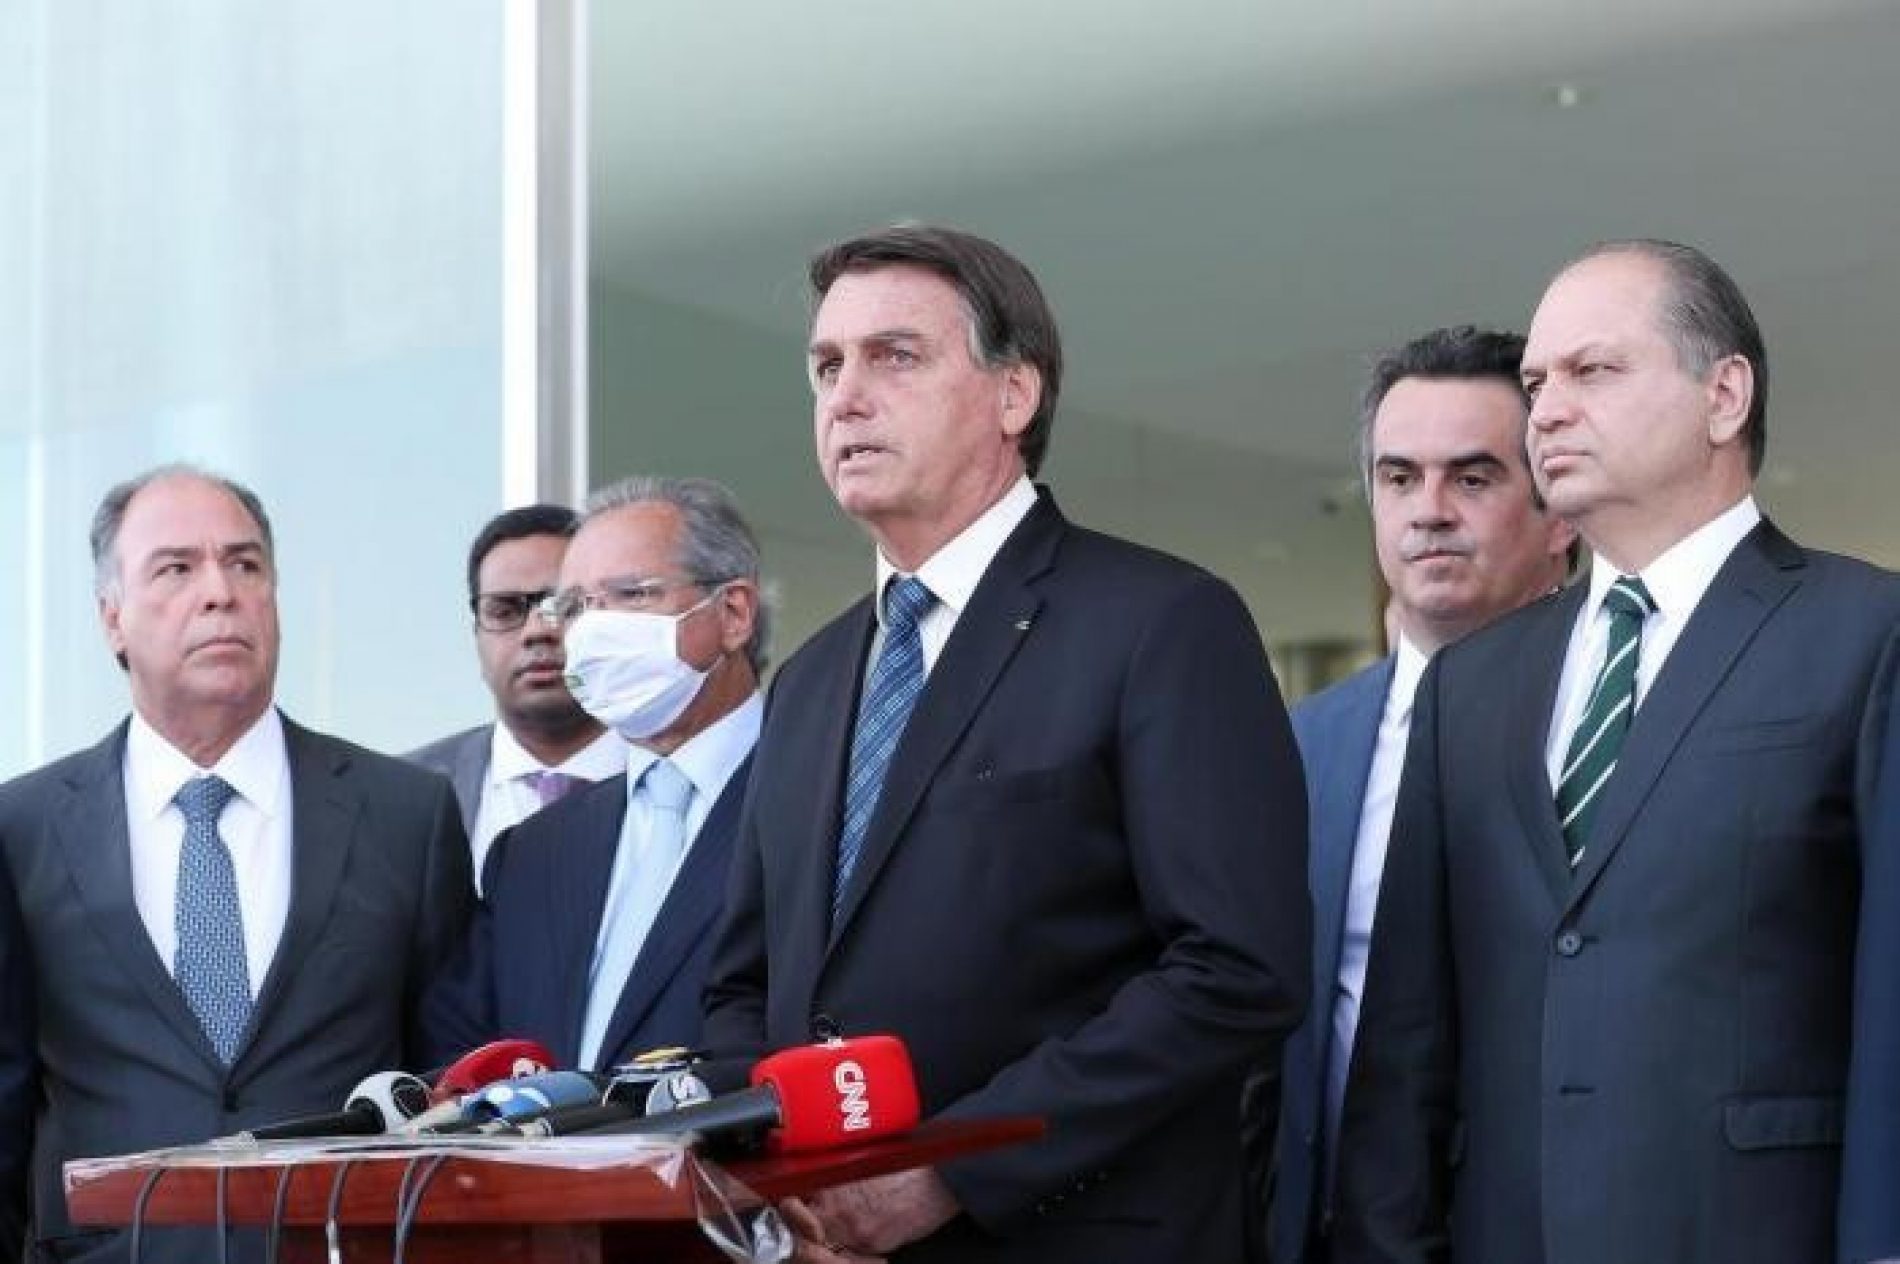 Reforma administrativa: Bolsonaro envia ao Congresso proposta que altera as regras do funcionalismo público